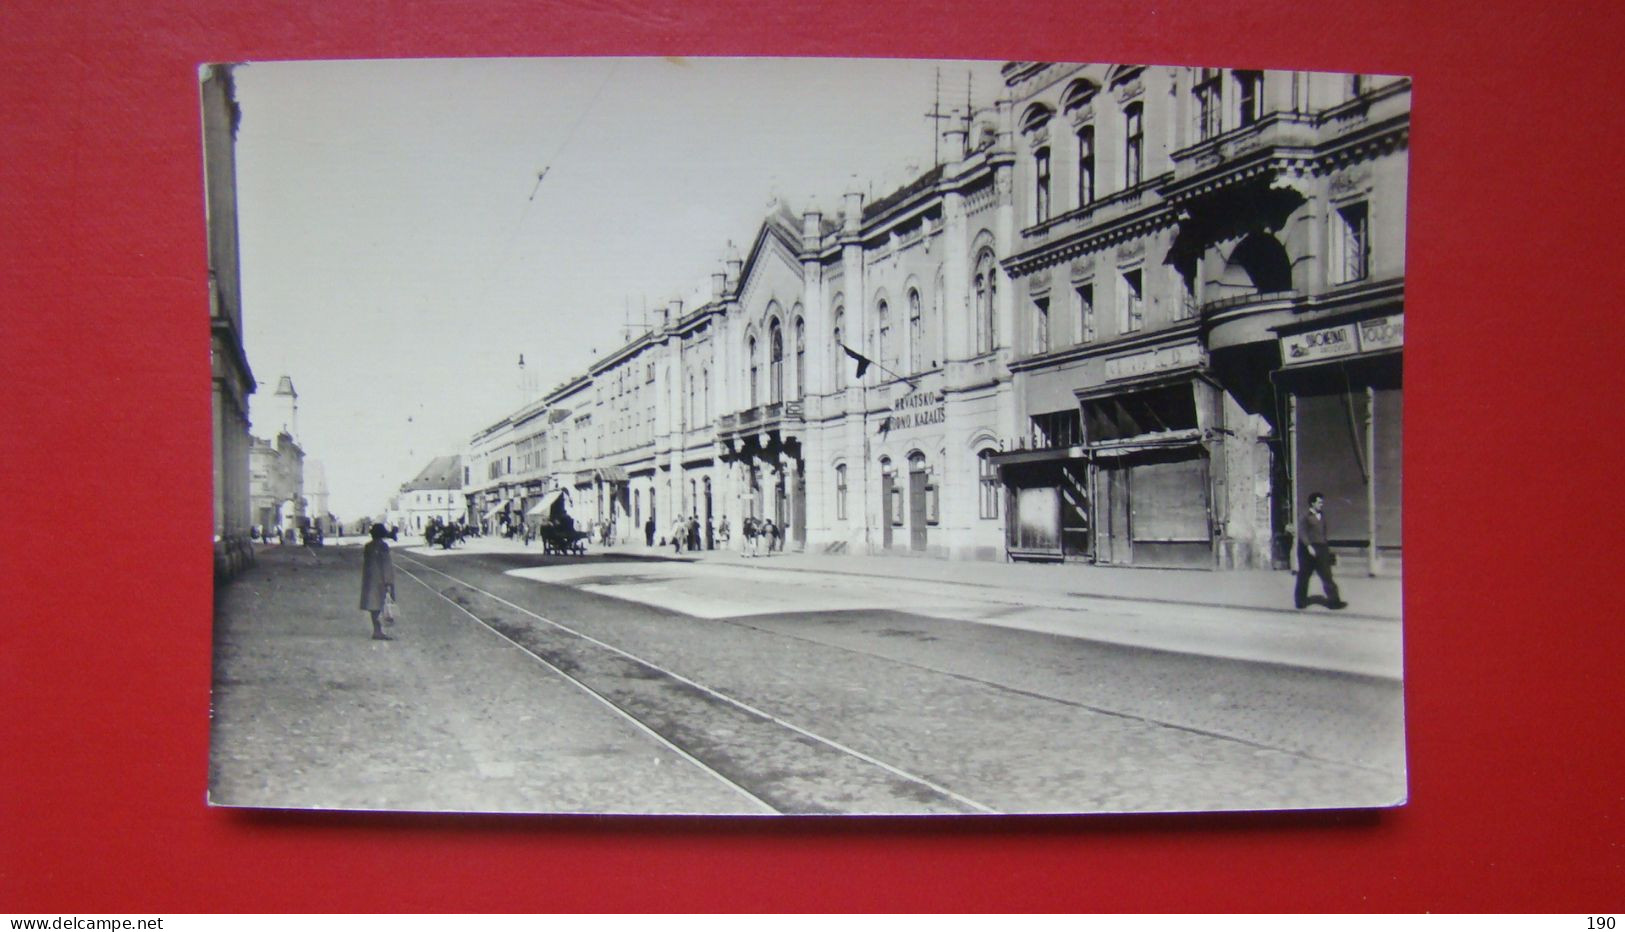 Osijek.Ulica Augusta Cesarca. Kazaliste,tramway. - Croacia